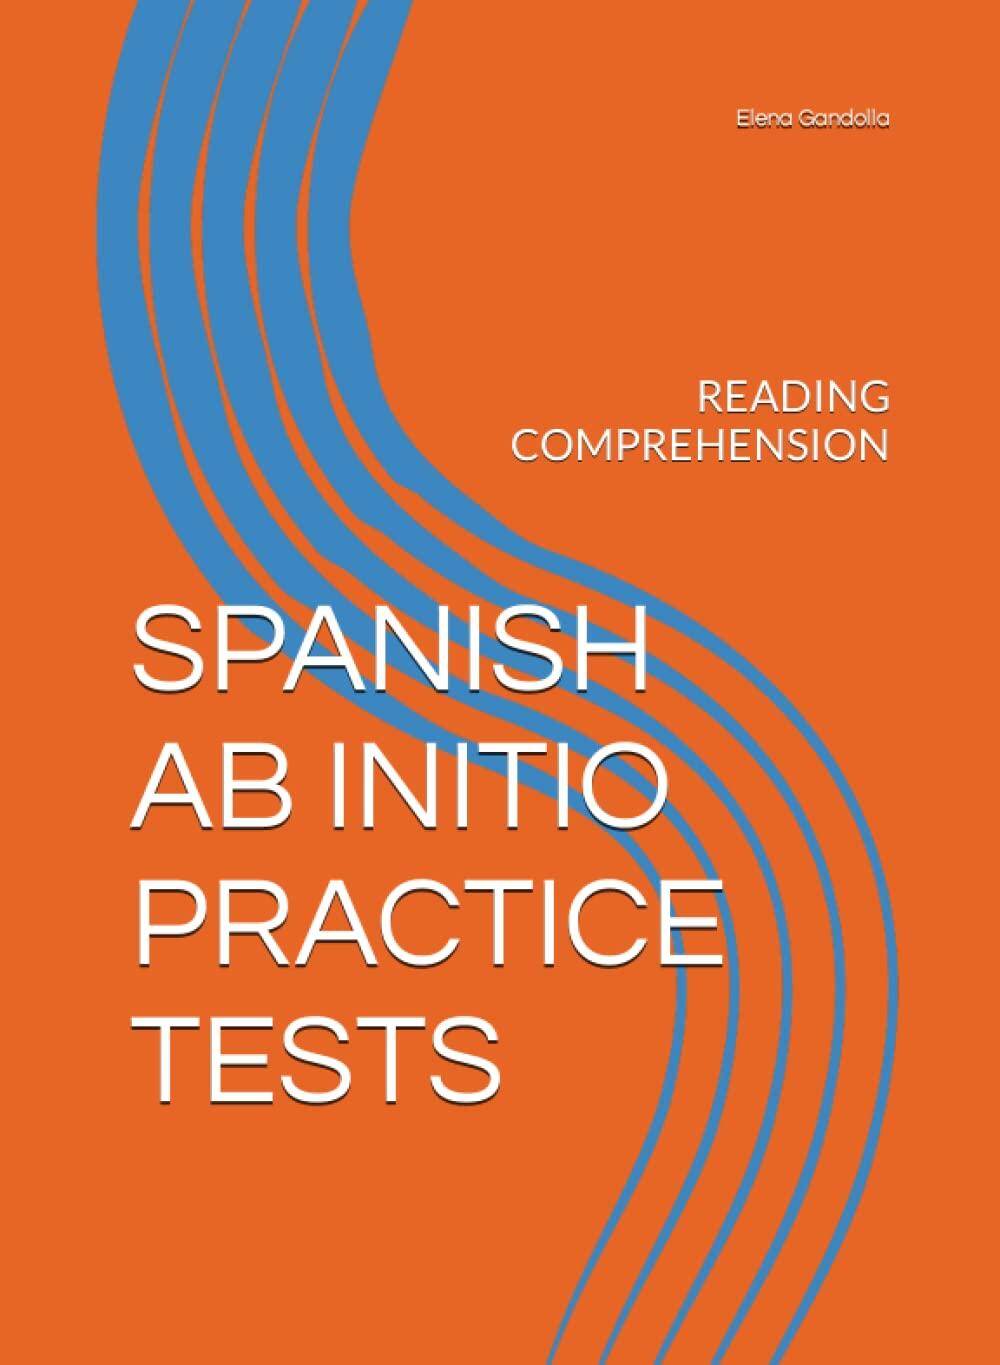 SPANISH AB INITIO PRACTICE TESTS: READING COMPREHENSION